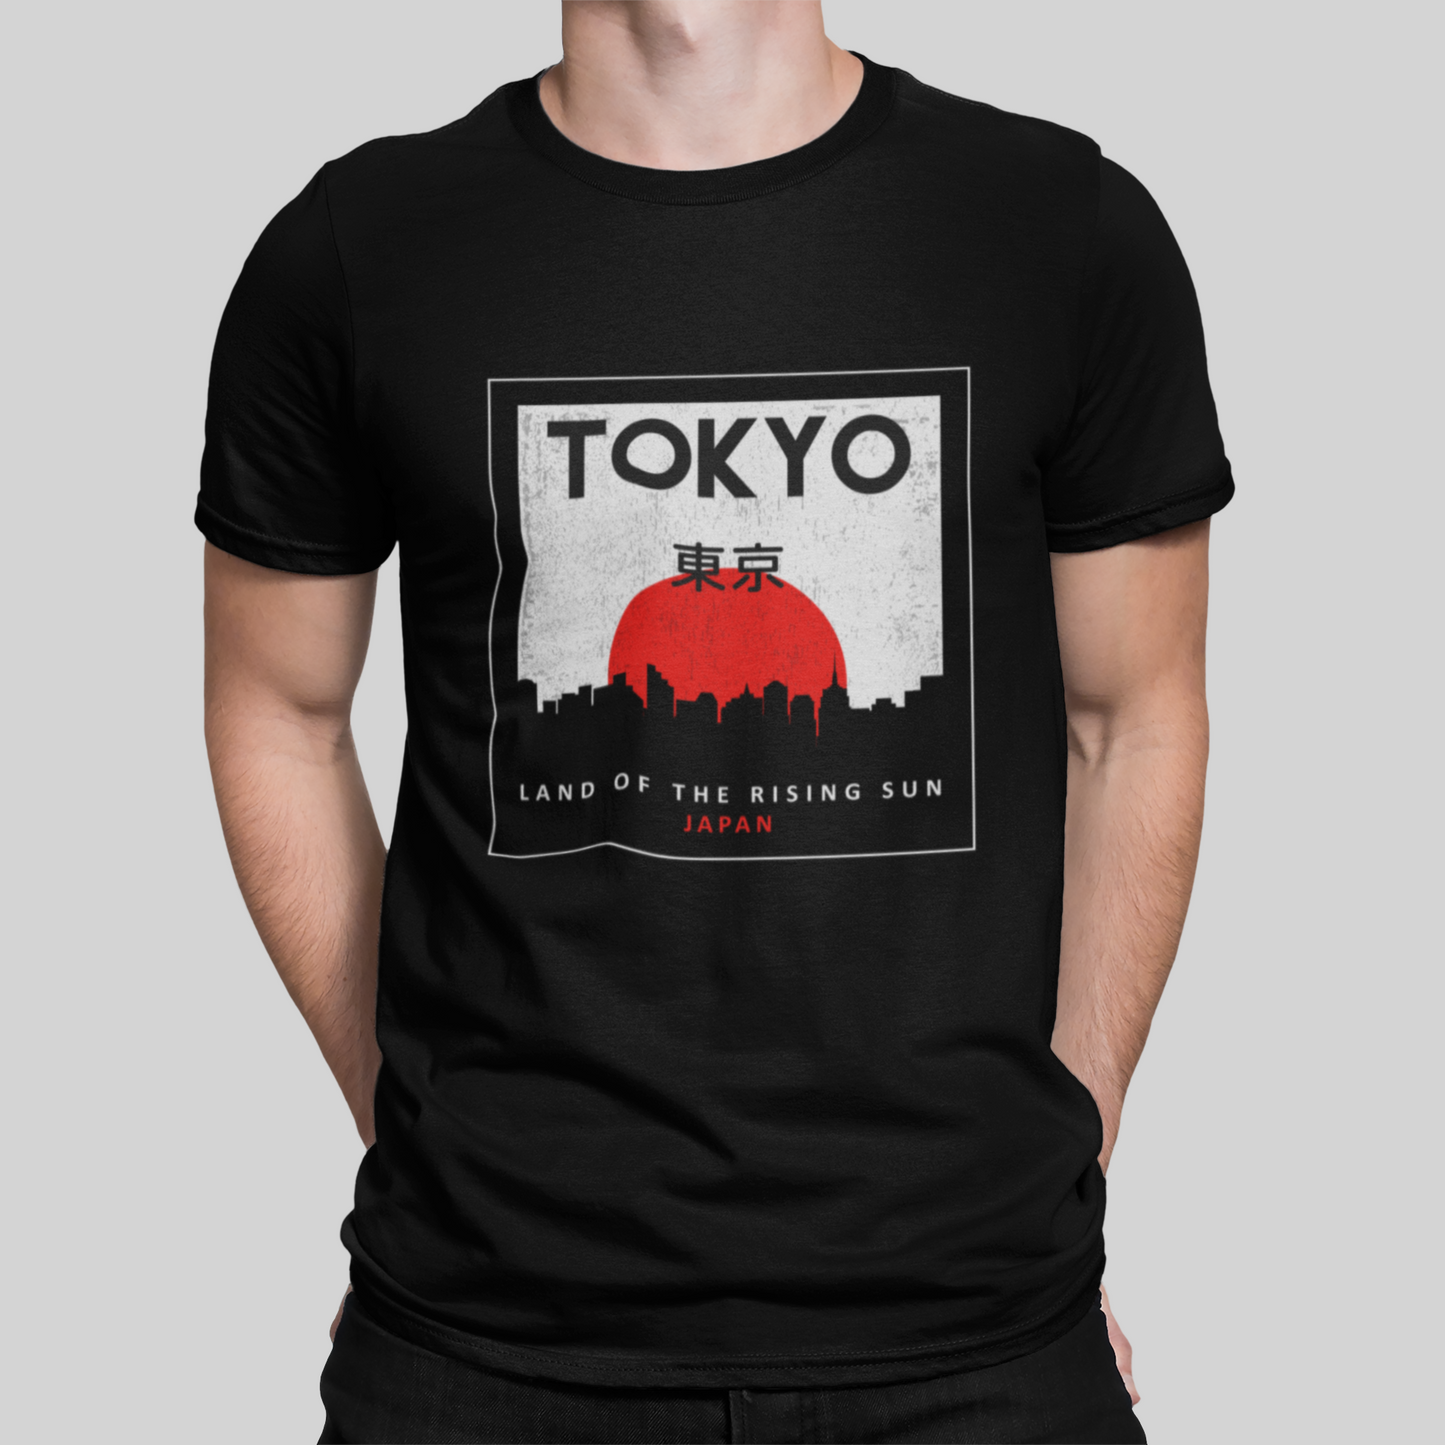 Tokyo Japan Black T-Shirt For Men